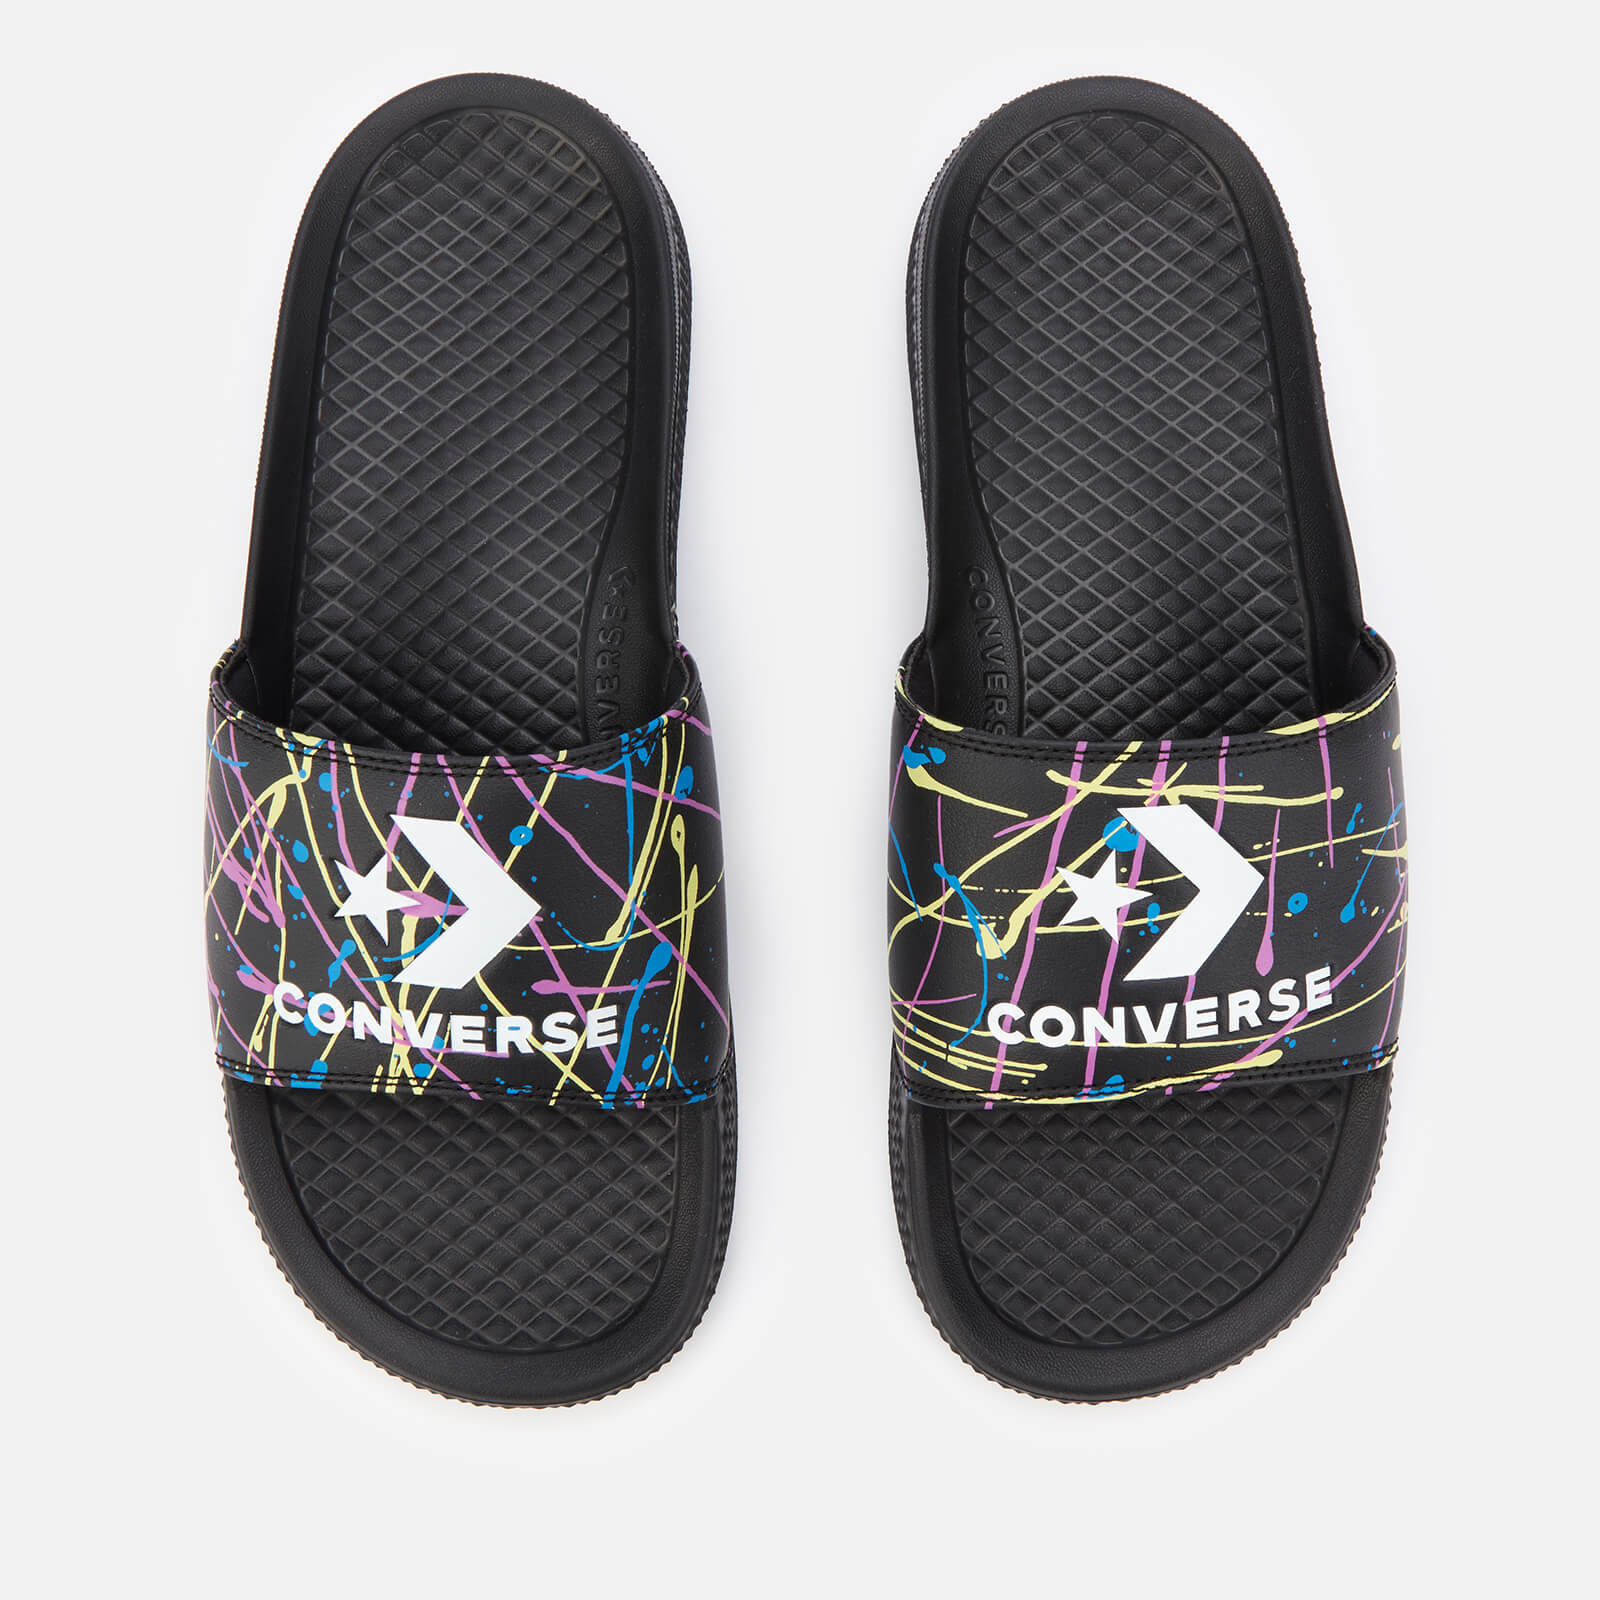 Converse Men's All Star Splatter Print Slide Sandals - Black - UK 7